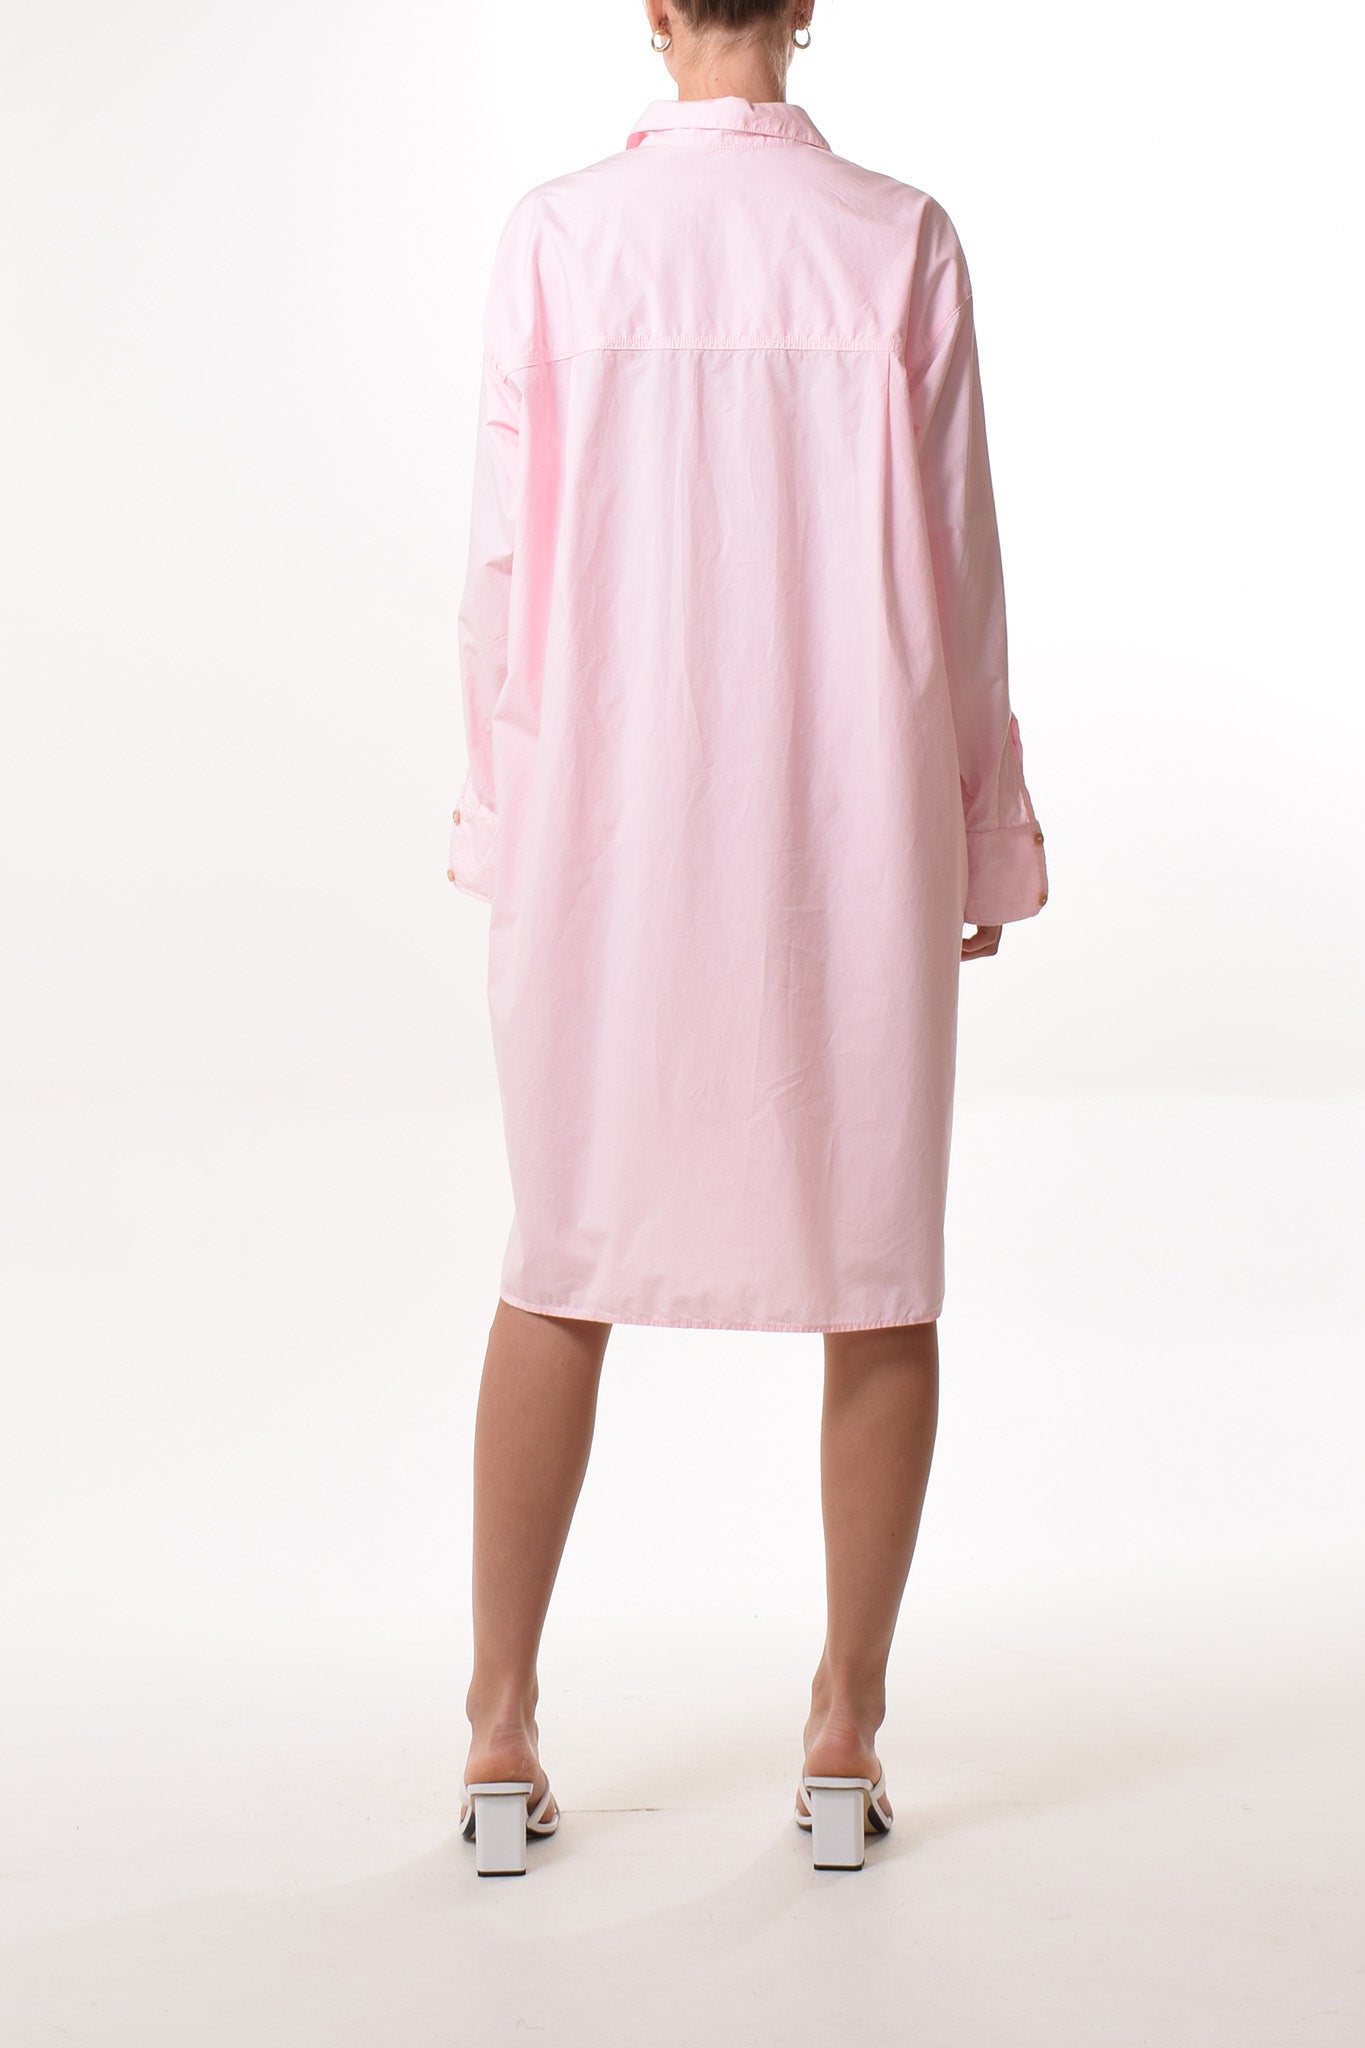 Turin dress in Blush (cotton)